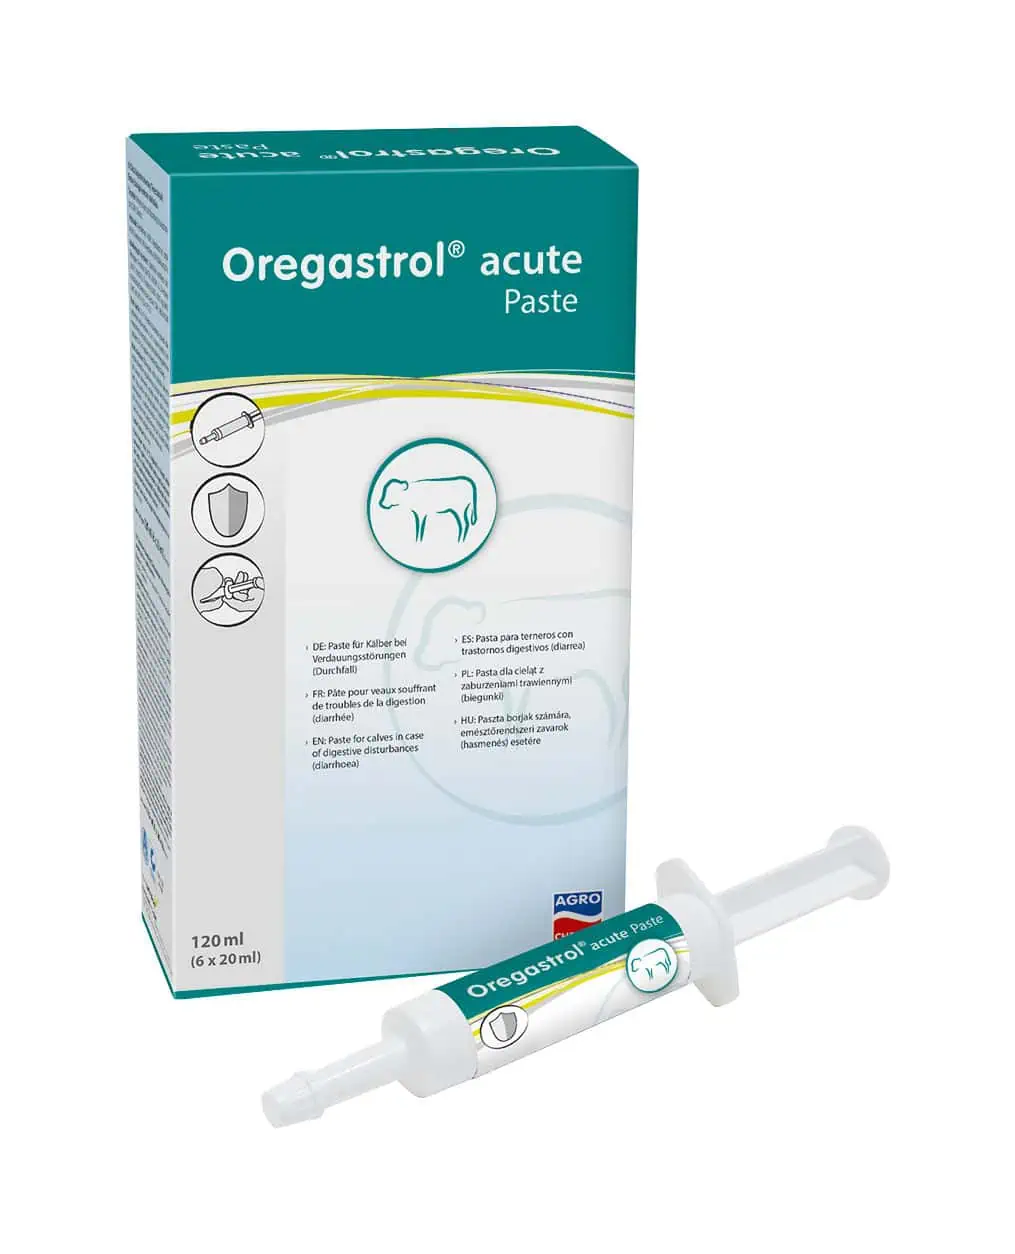 Oregastral-acute paste 6 x 20 ml oral injectors